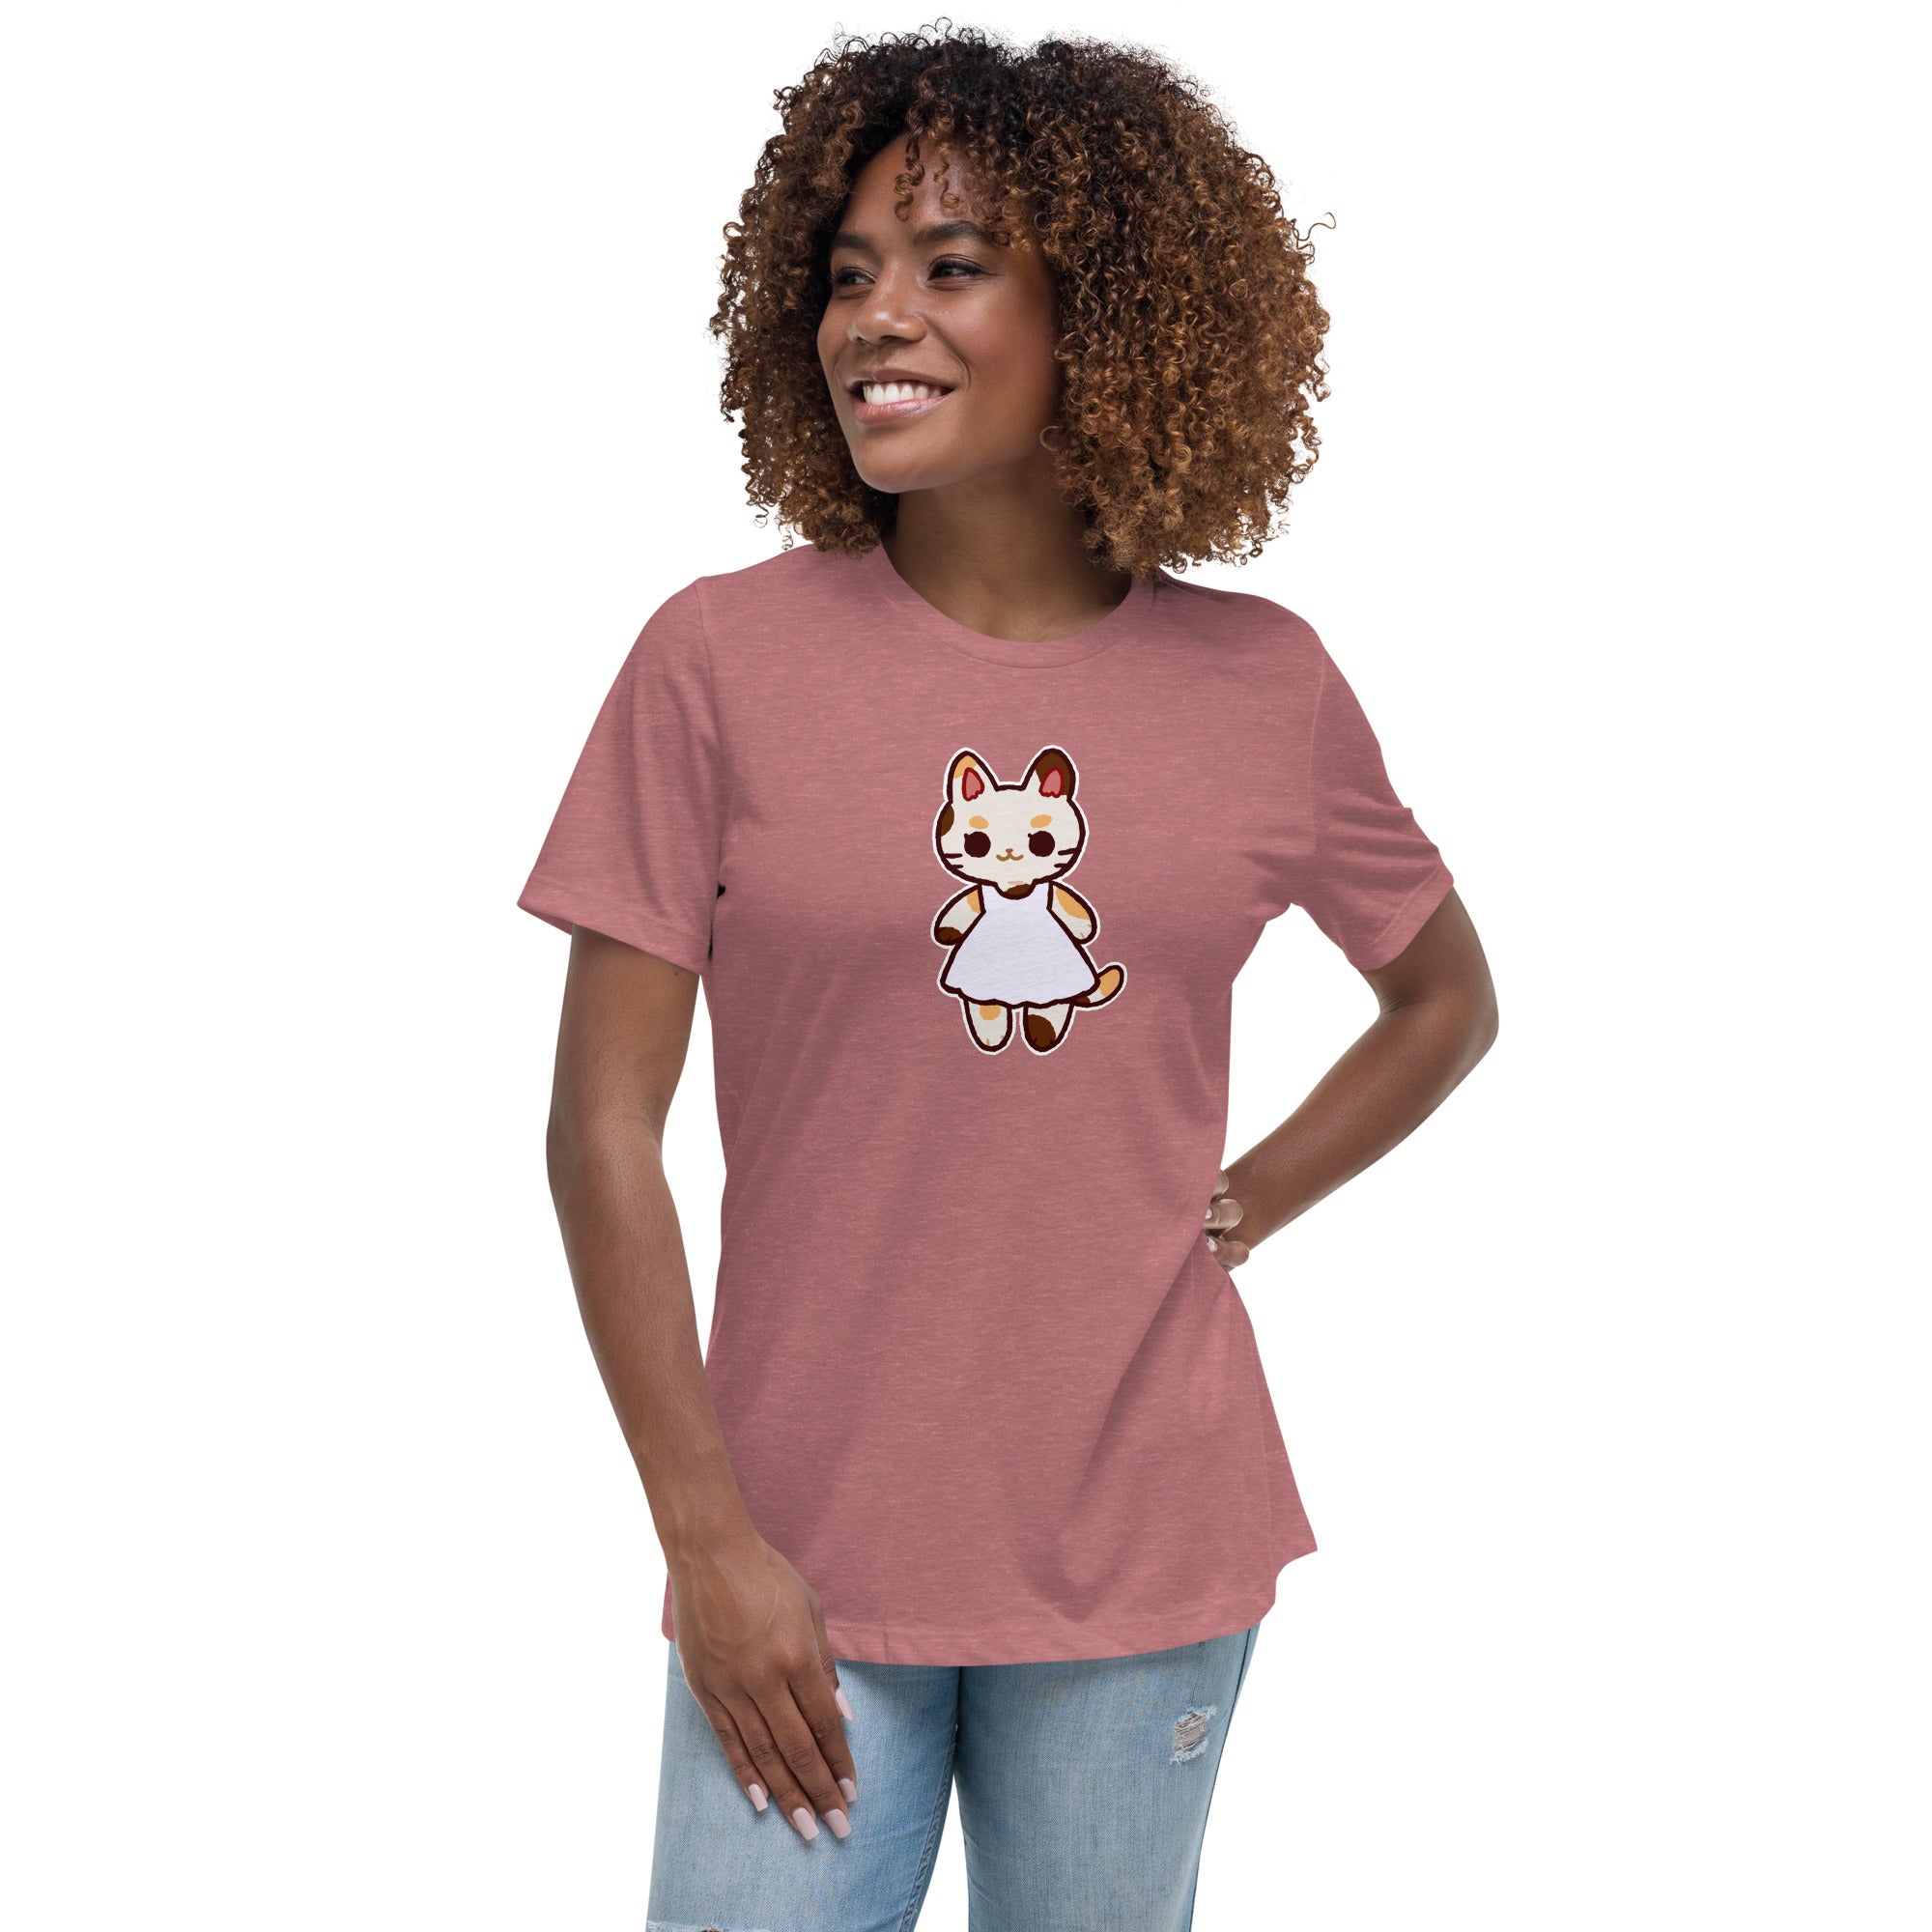 Kawaii Calico Cat in a Sun Dress Women's Relaxed T-Shirt